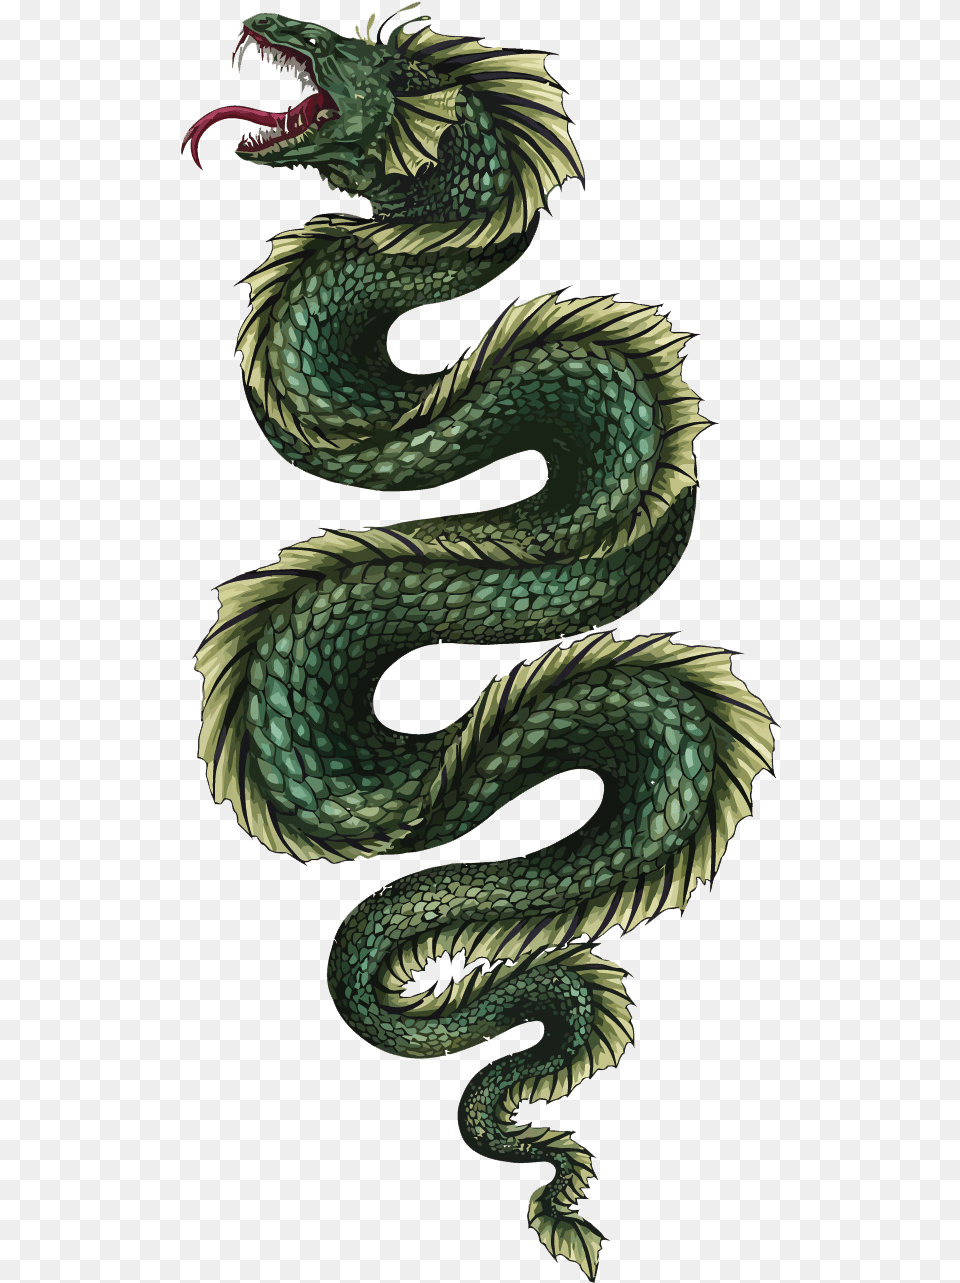 Download Midgard Serpent Chinese Dragon Vector Jxf6rmungandr Serpent Dragon, Animal, Reptile, Snake, Dinosaur Png